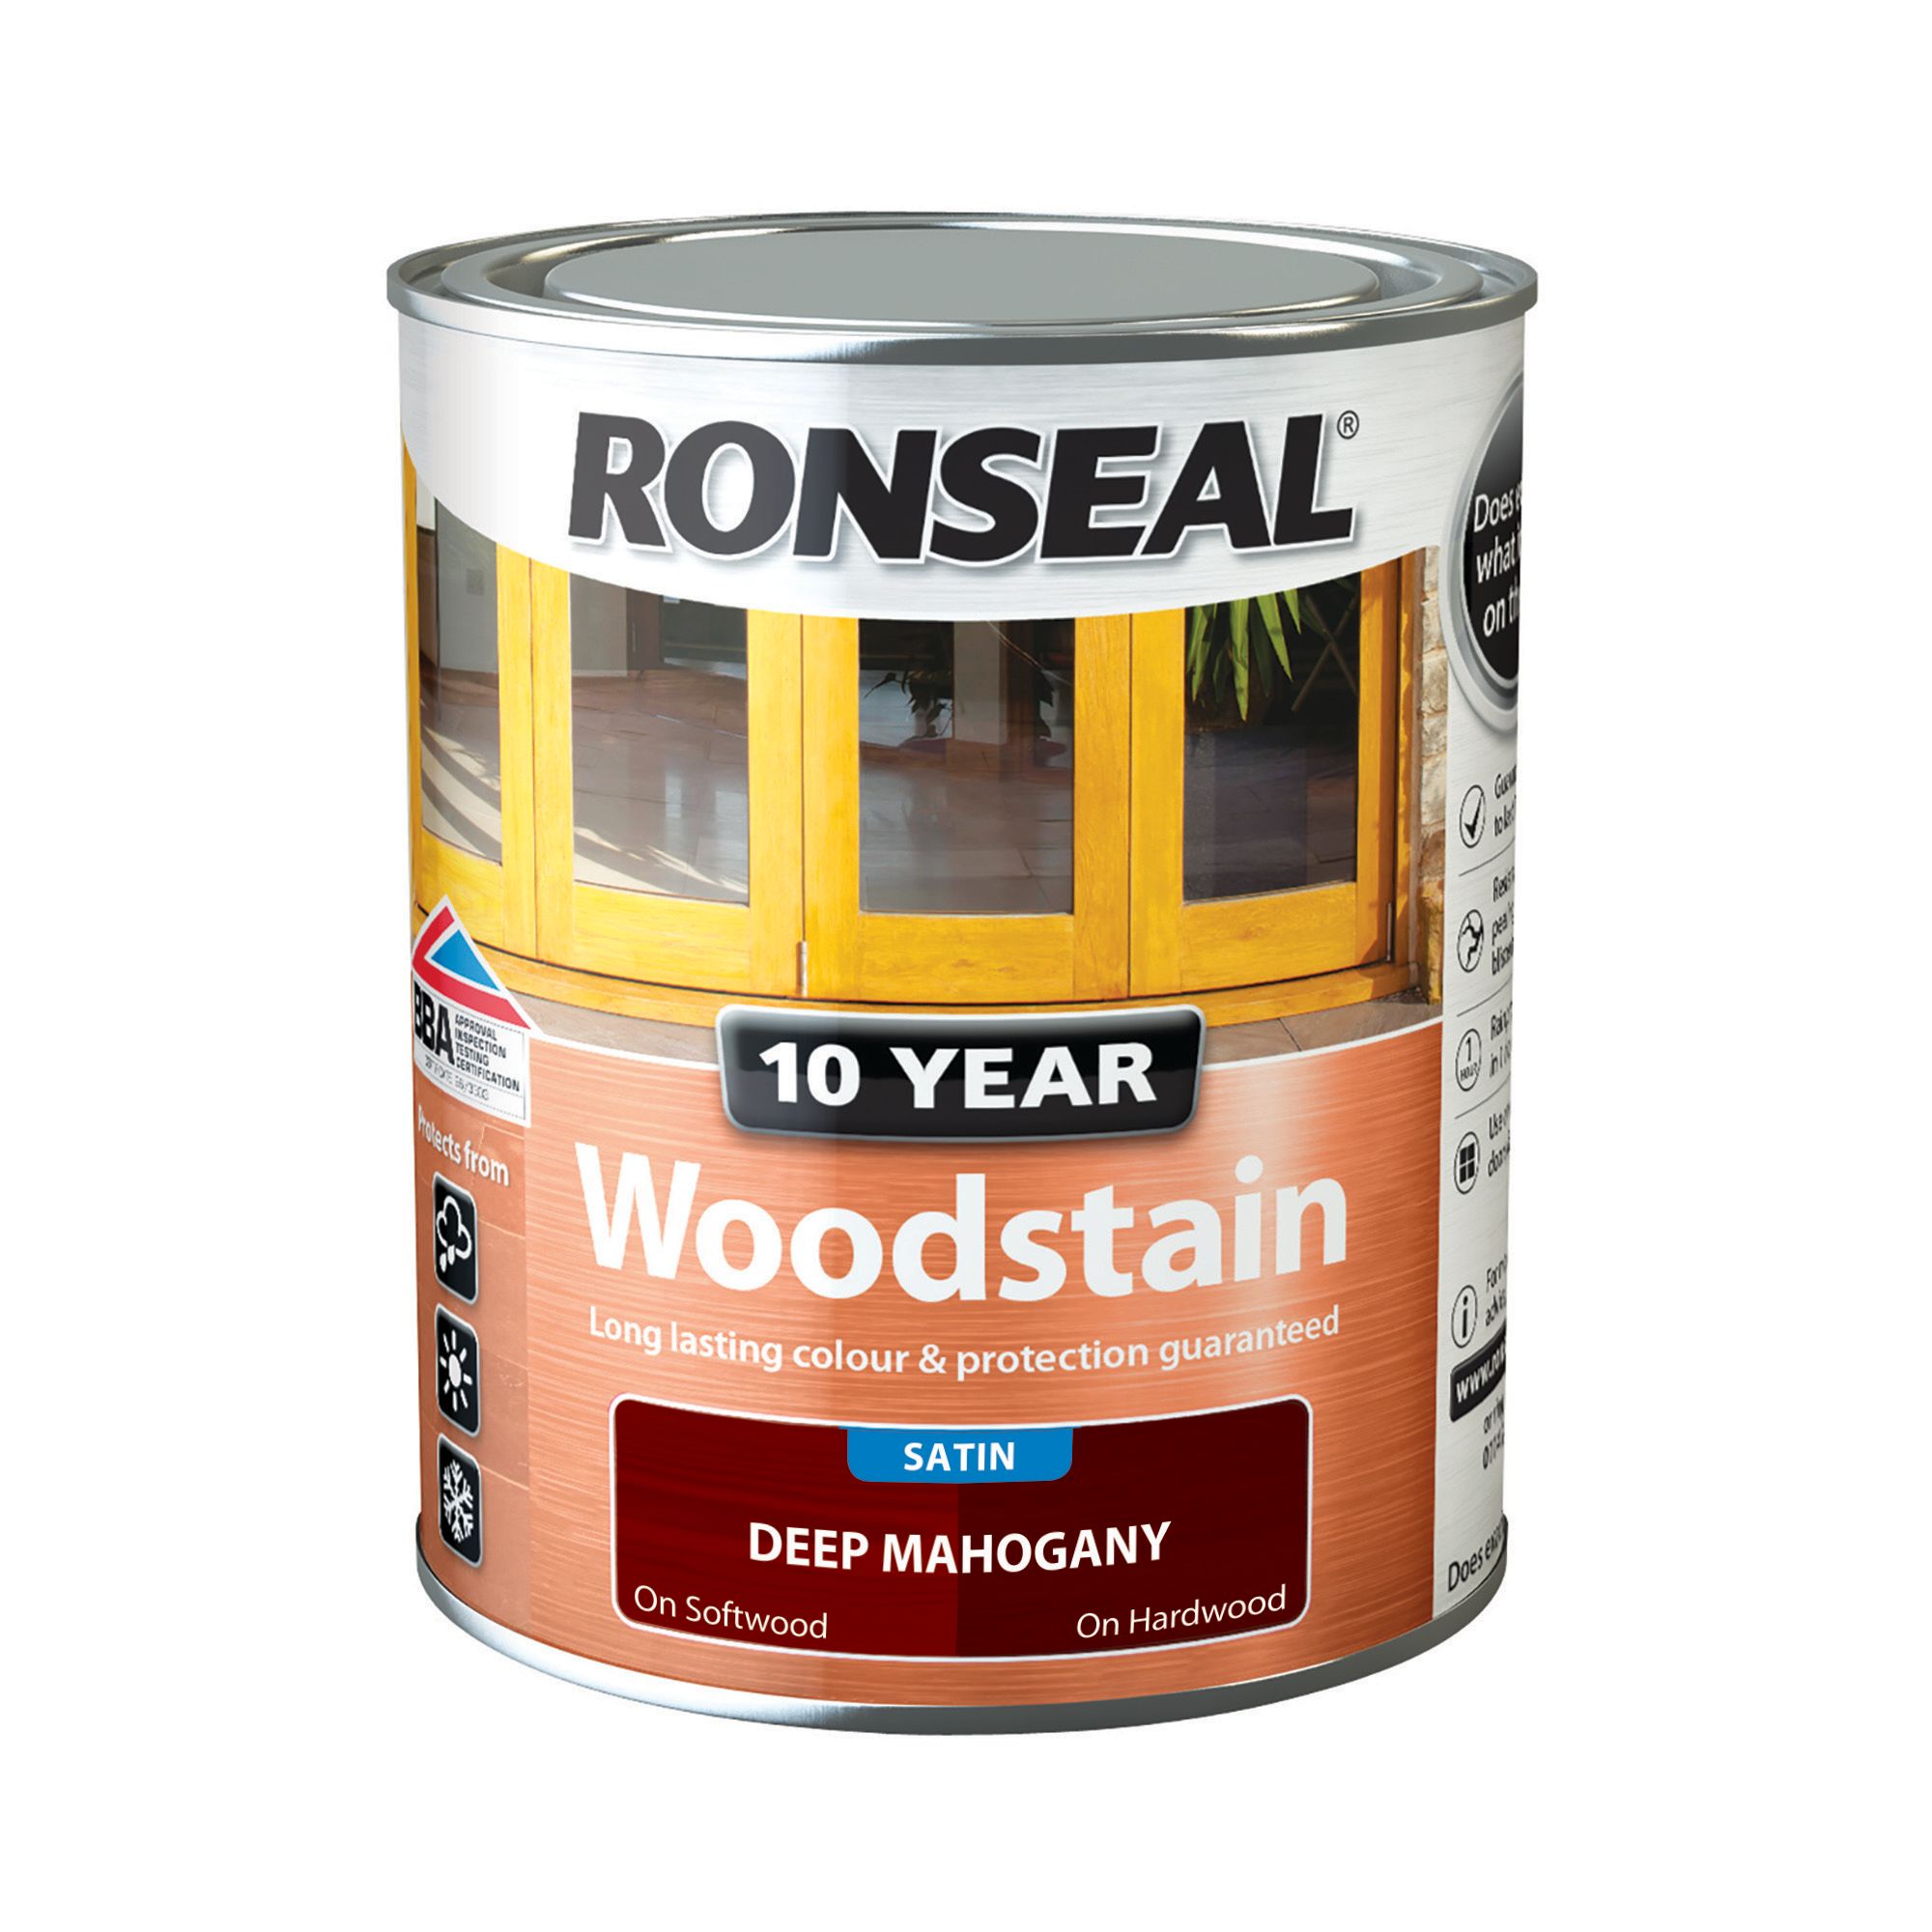 Ronseal 10 Year Woodstain - Deep Mahogany - 750ml